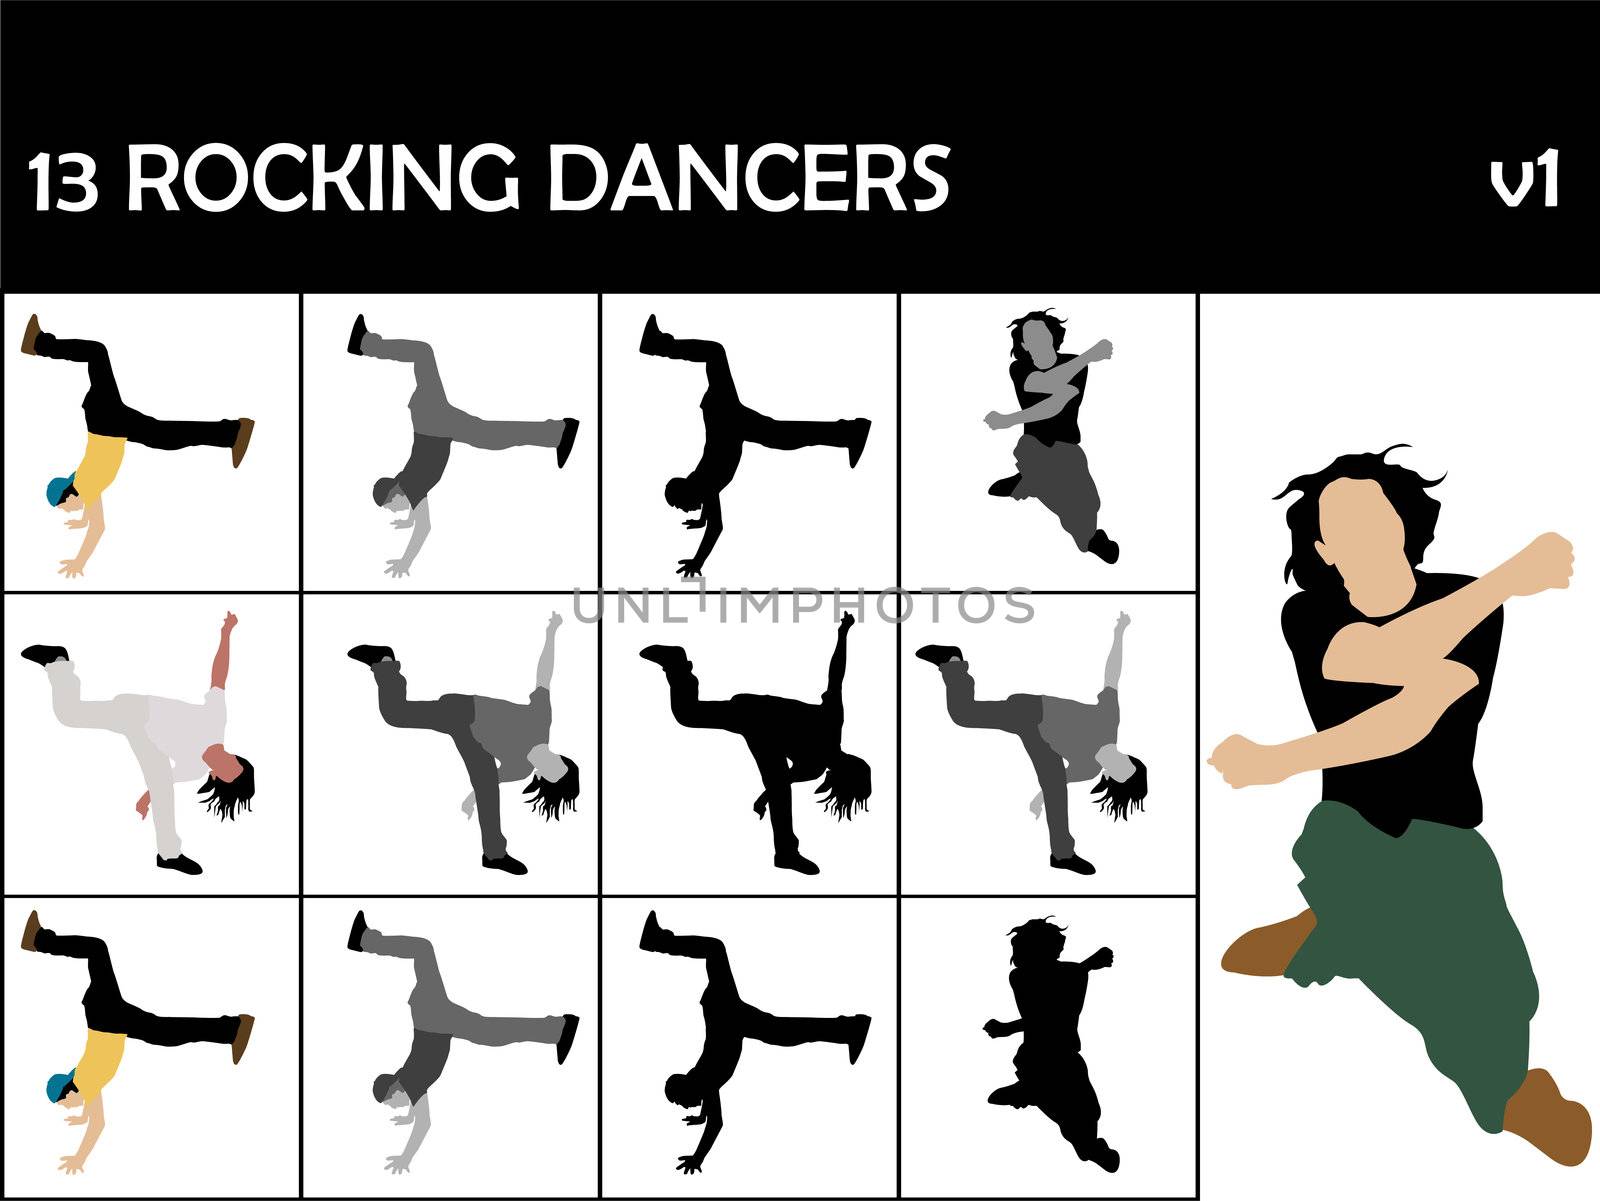 rocking dancers by imagerymajestic